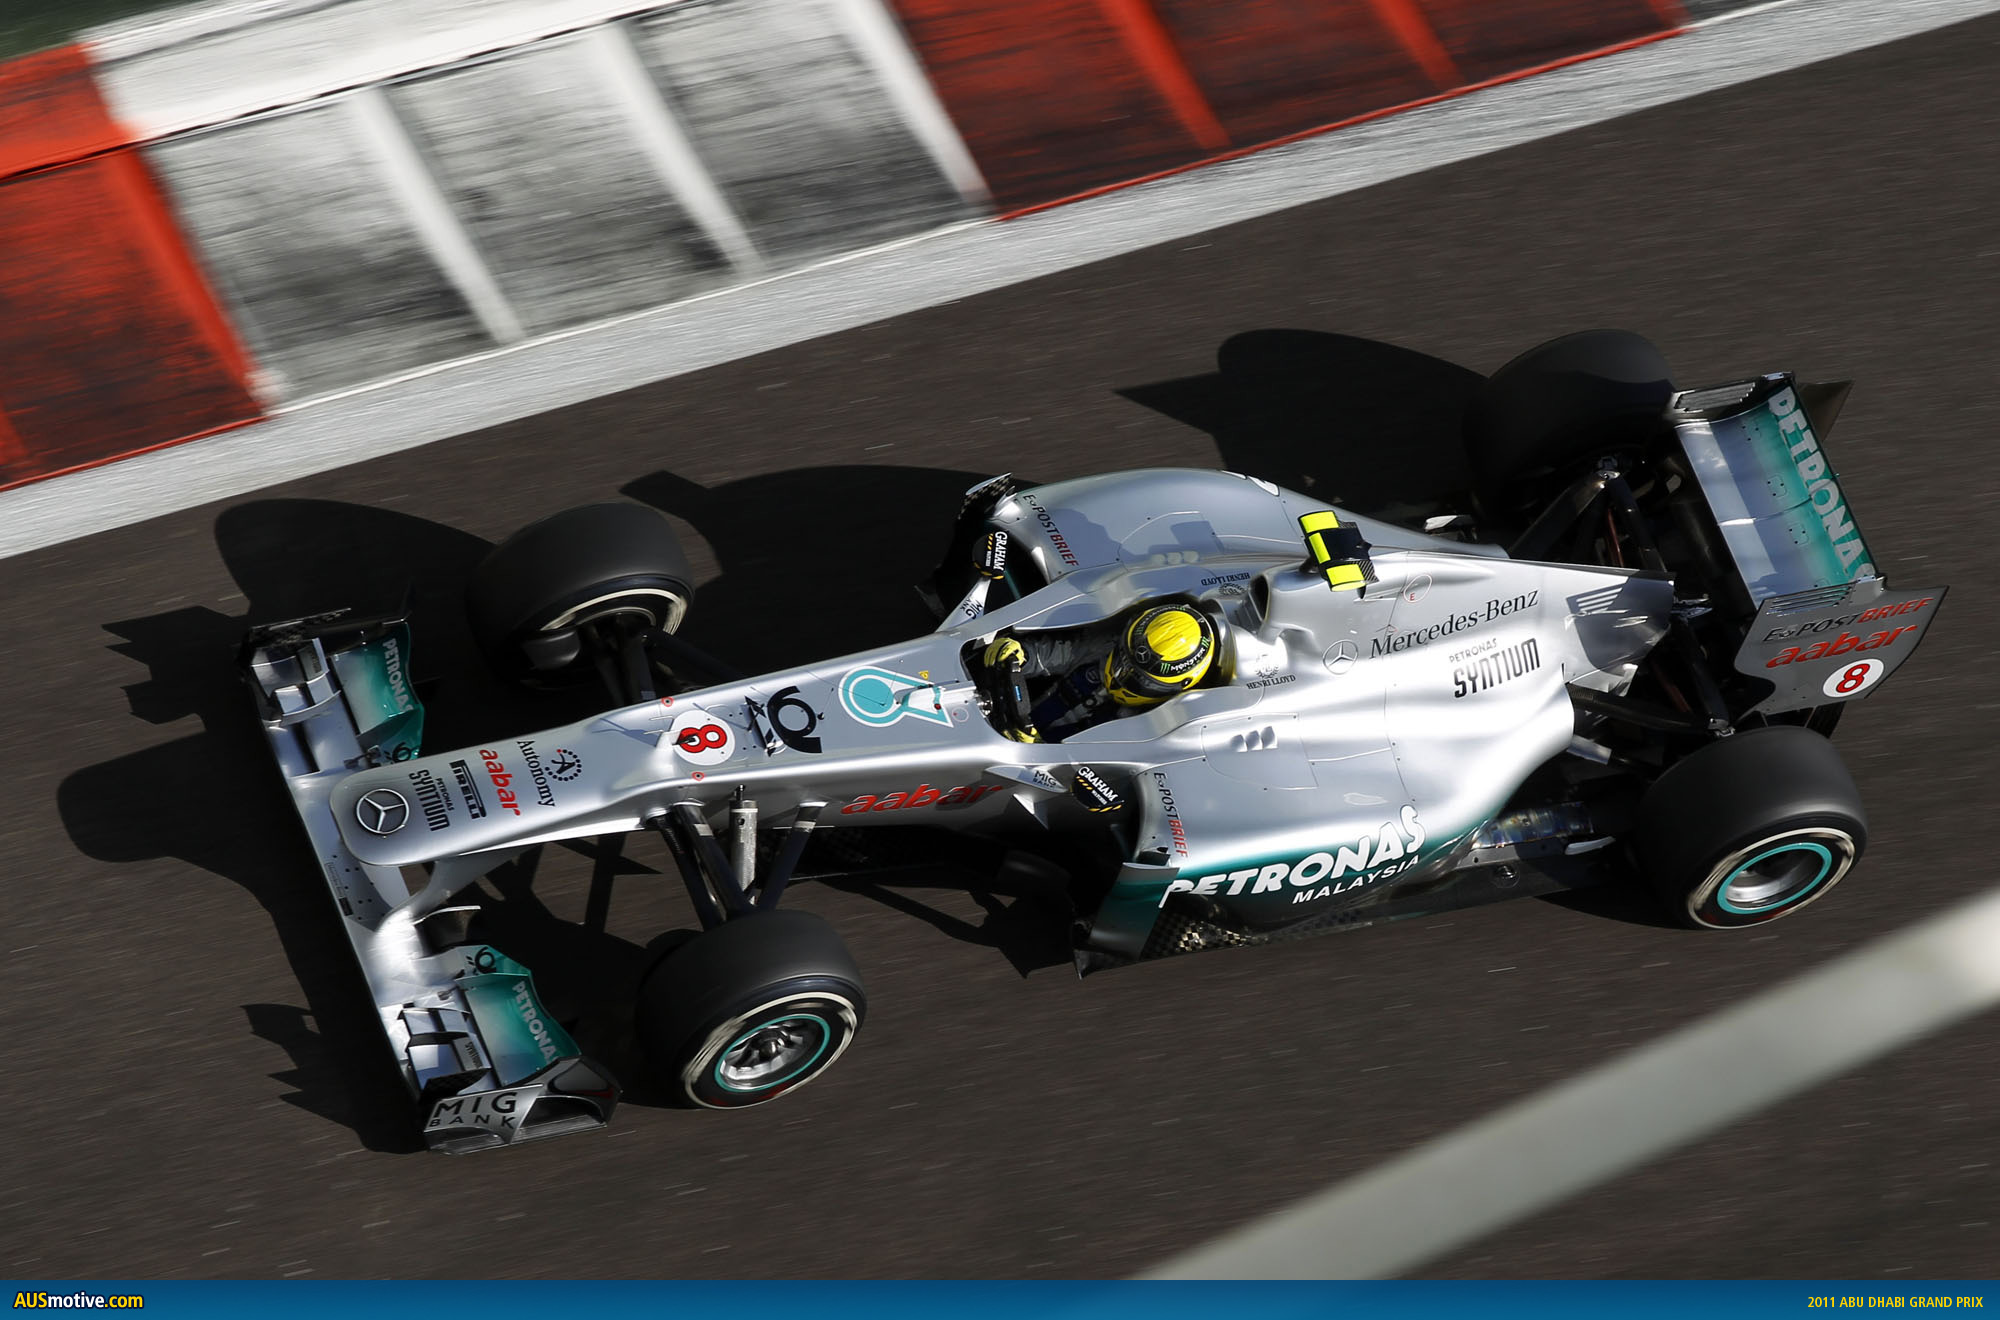 2011 Abu Dhabi Grand Prix in pictures – AUSmotive.com